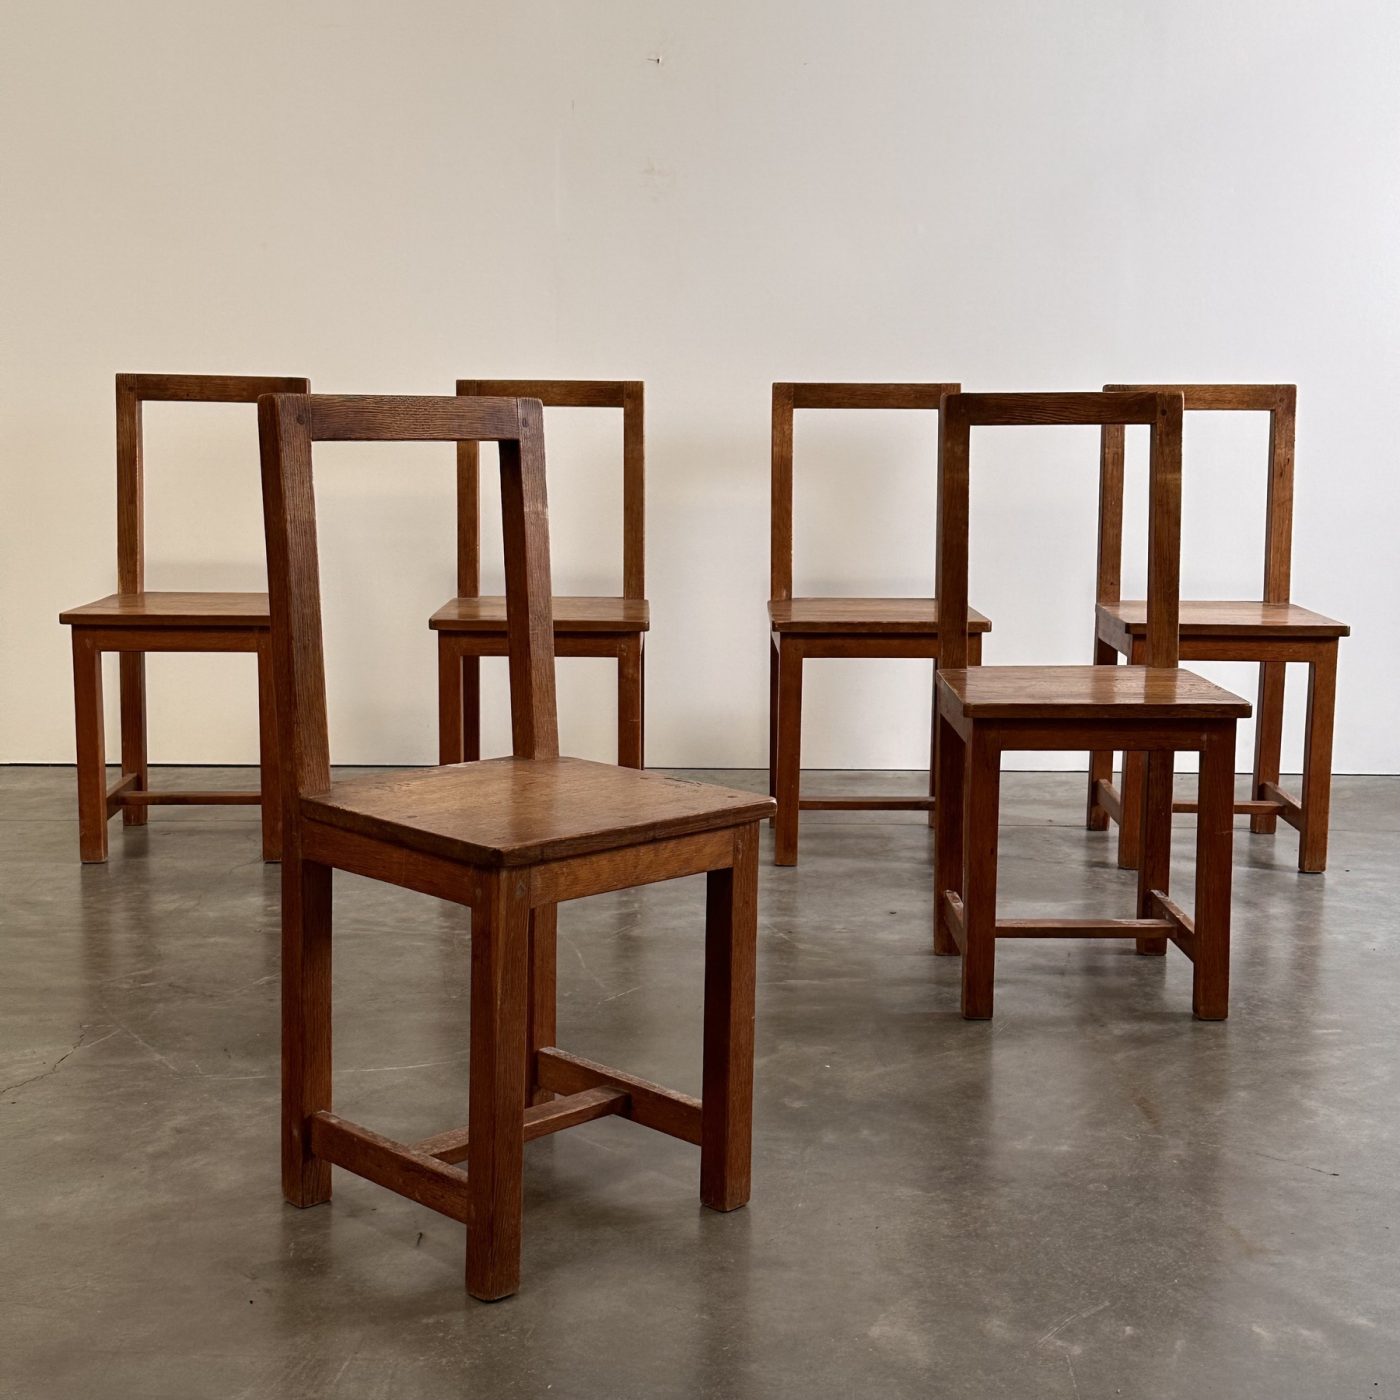 objet-vagabond-simple-chairs0000